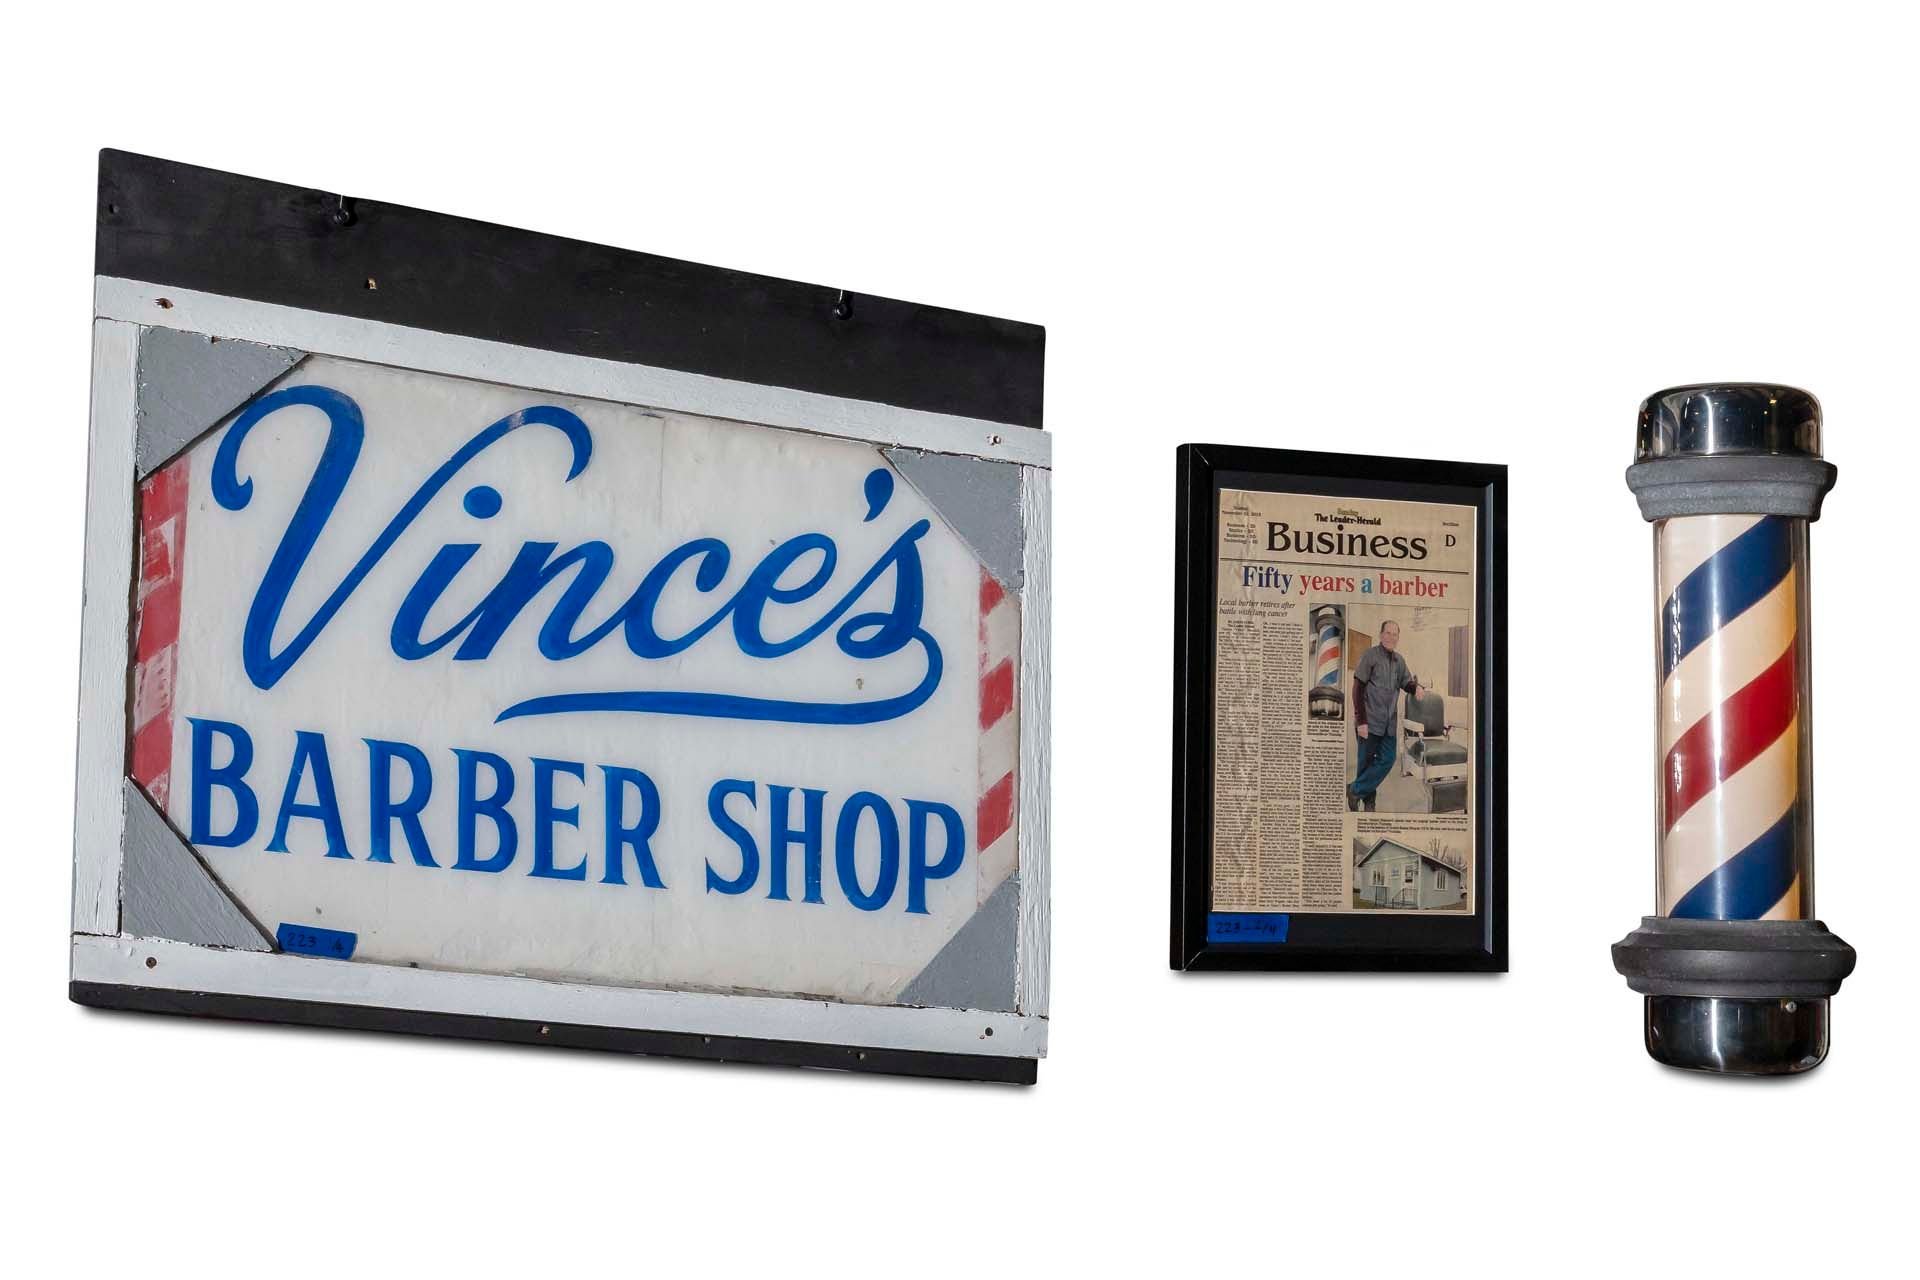 For Sale Assorted Vince's Barber Shop Signage with Newspaper Article, Sign, Functioning Barber Shop Pole